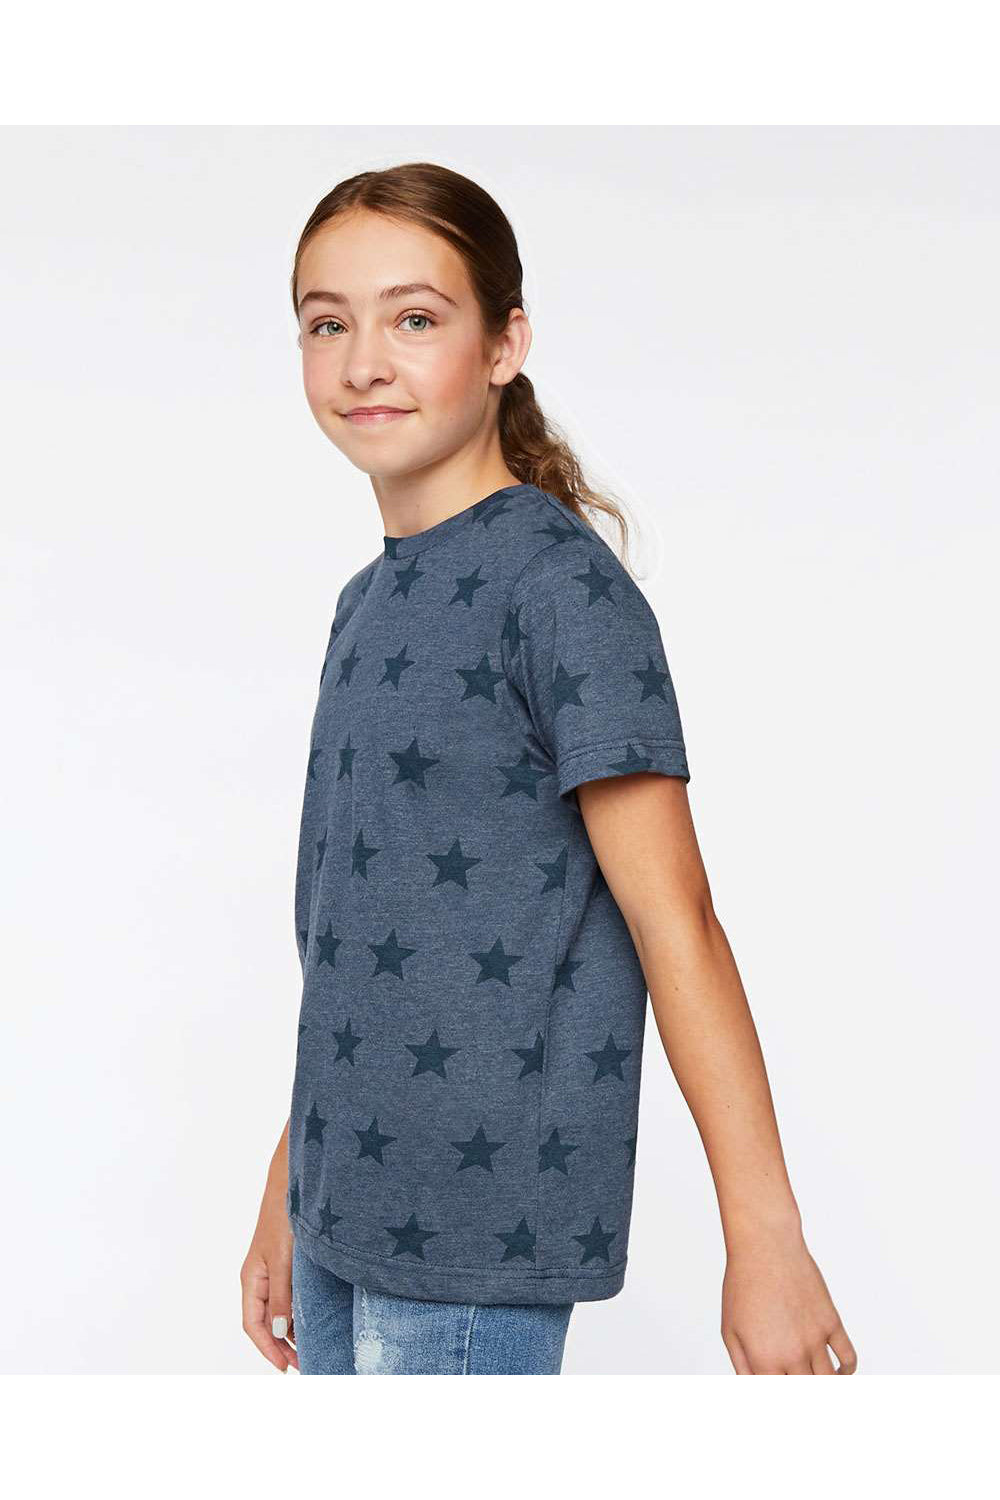 Code Five 2229 Youth Star Print Short Sleeve Crewneck T-Shirt Denim Blue Model Side